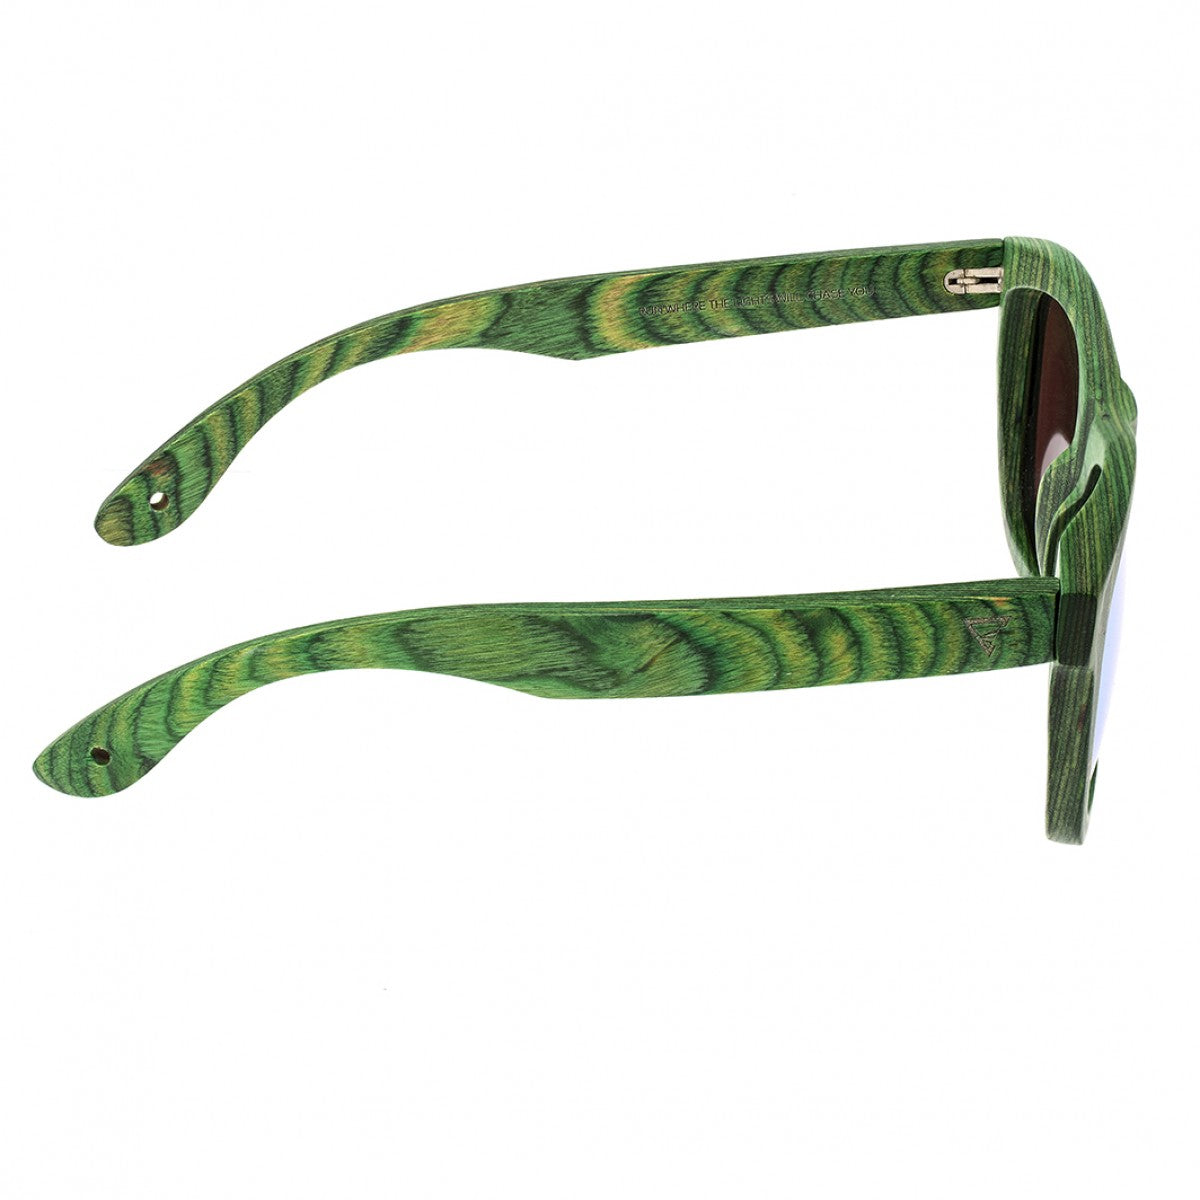 Spectrum Slater Wood Polarized Sunglasses - Green/Green - SSGS101GY